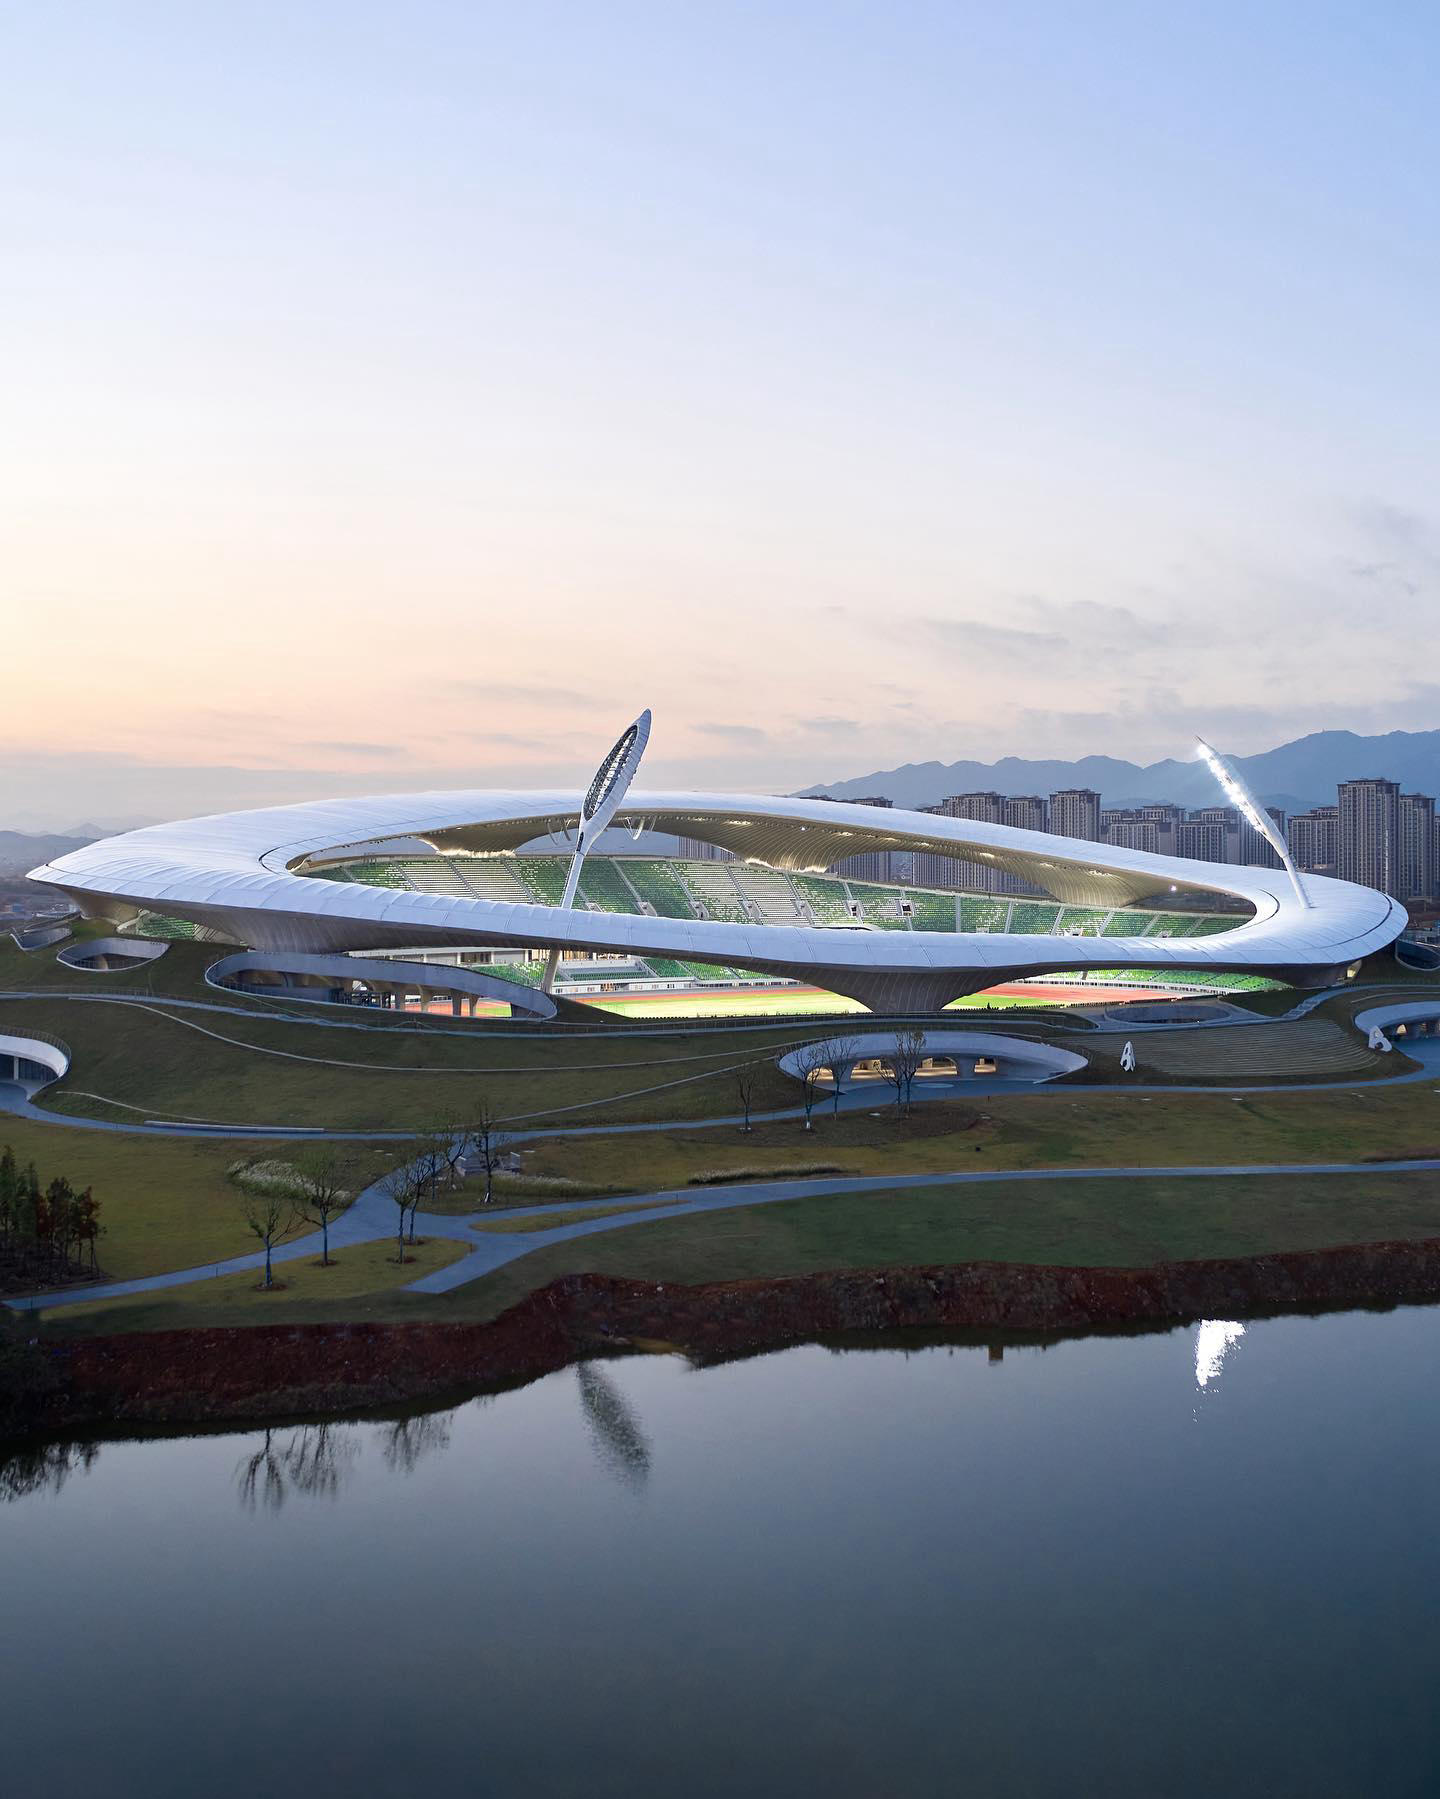 designboom magazine - #madarchitects completes the sinuous stadium at its #quzhou sports park